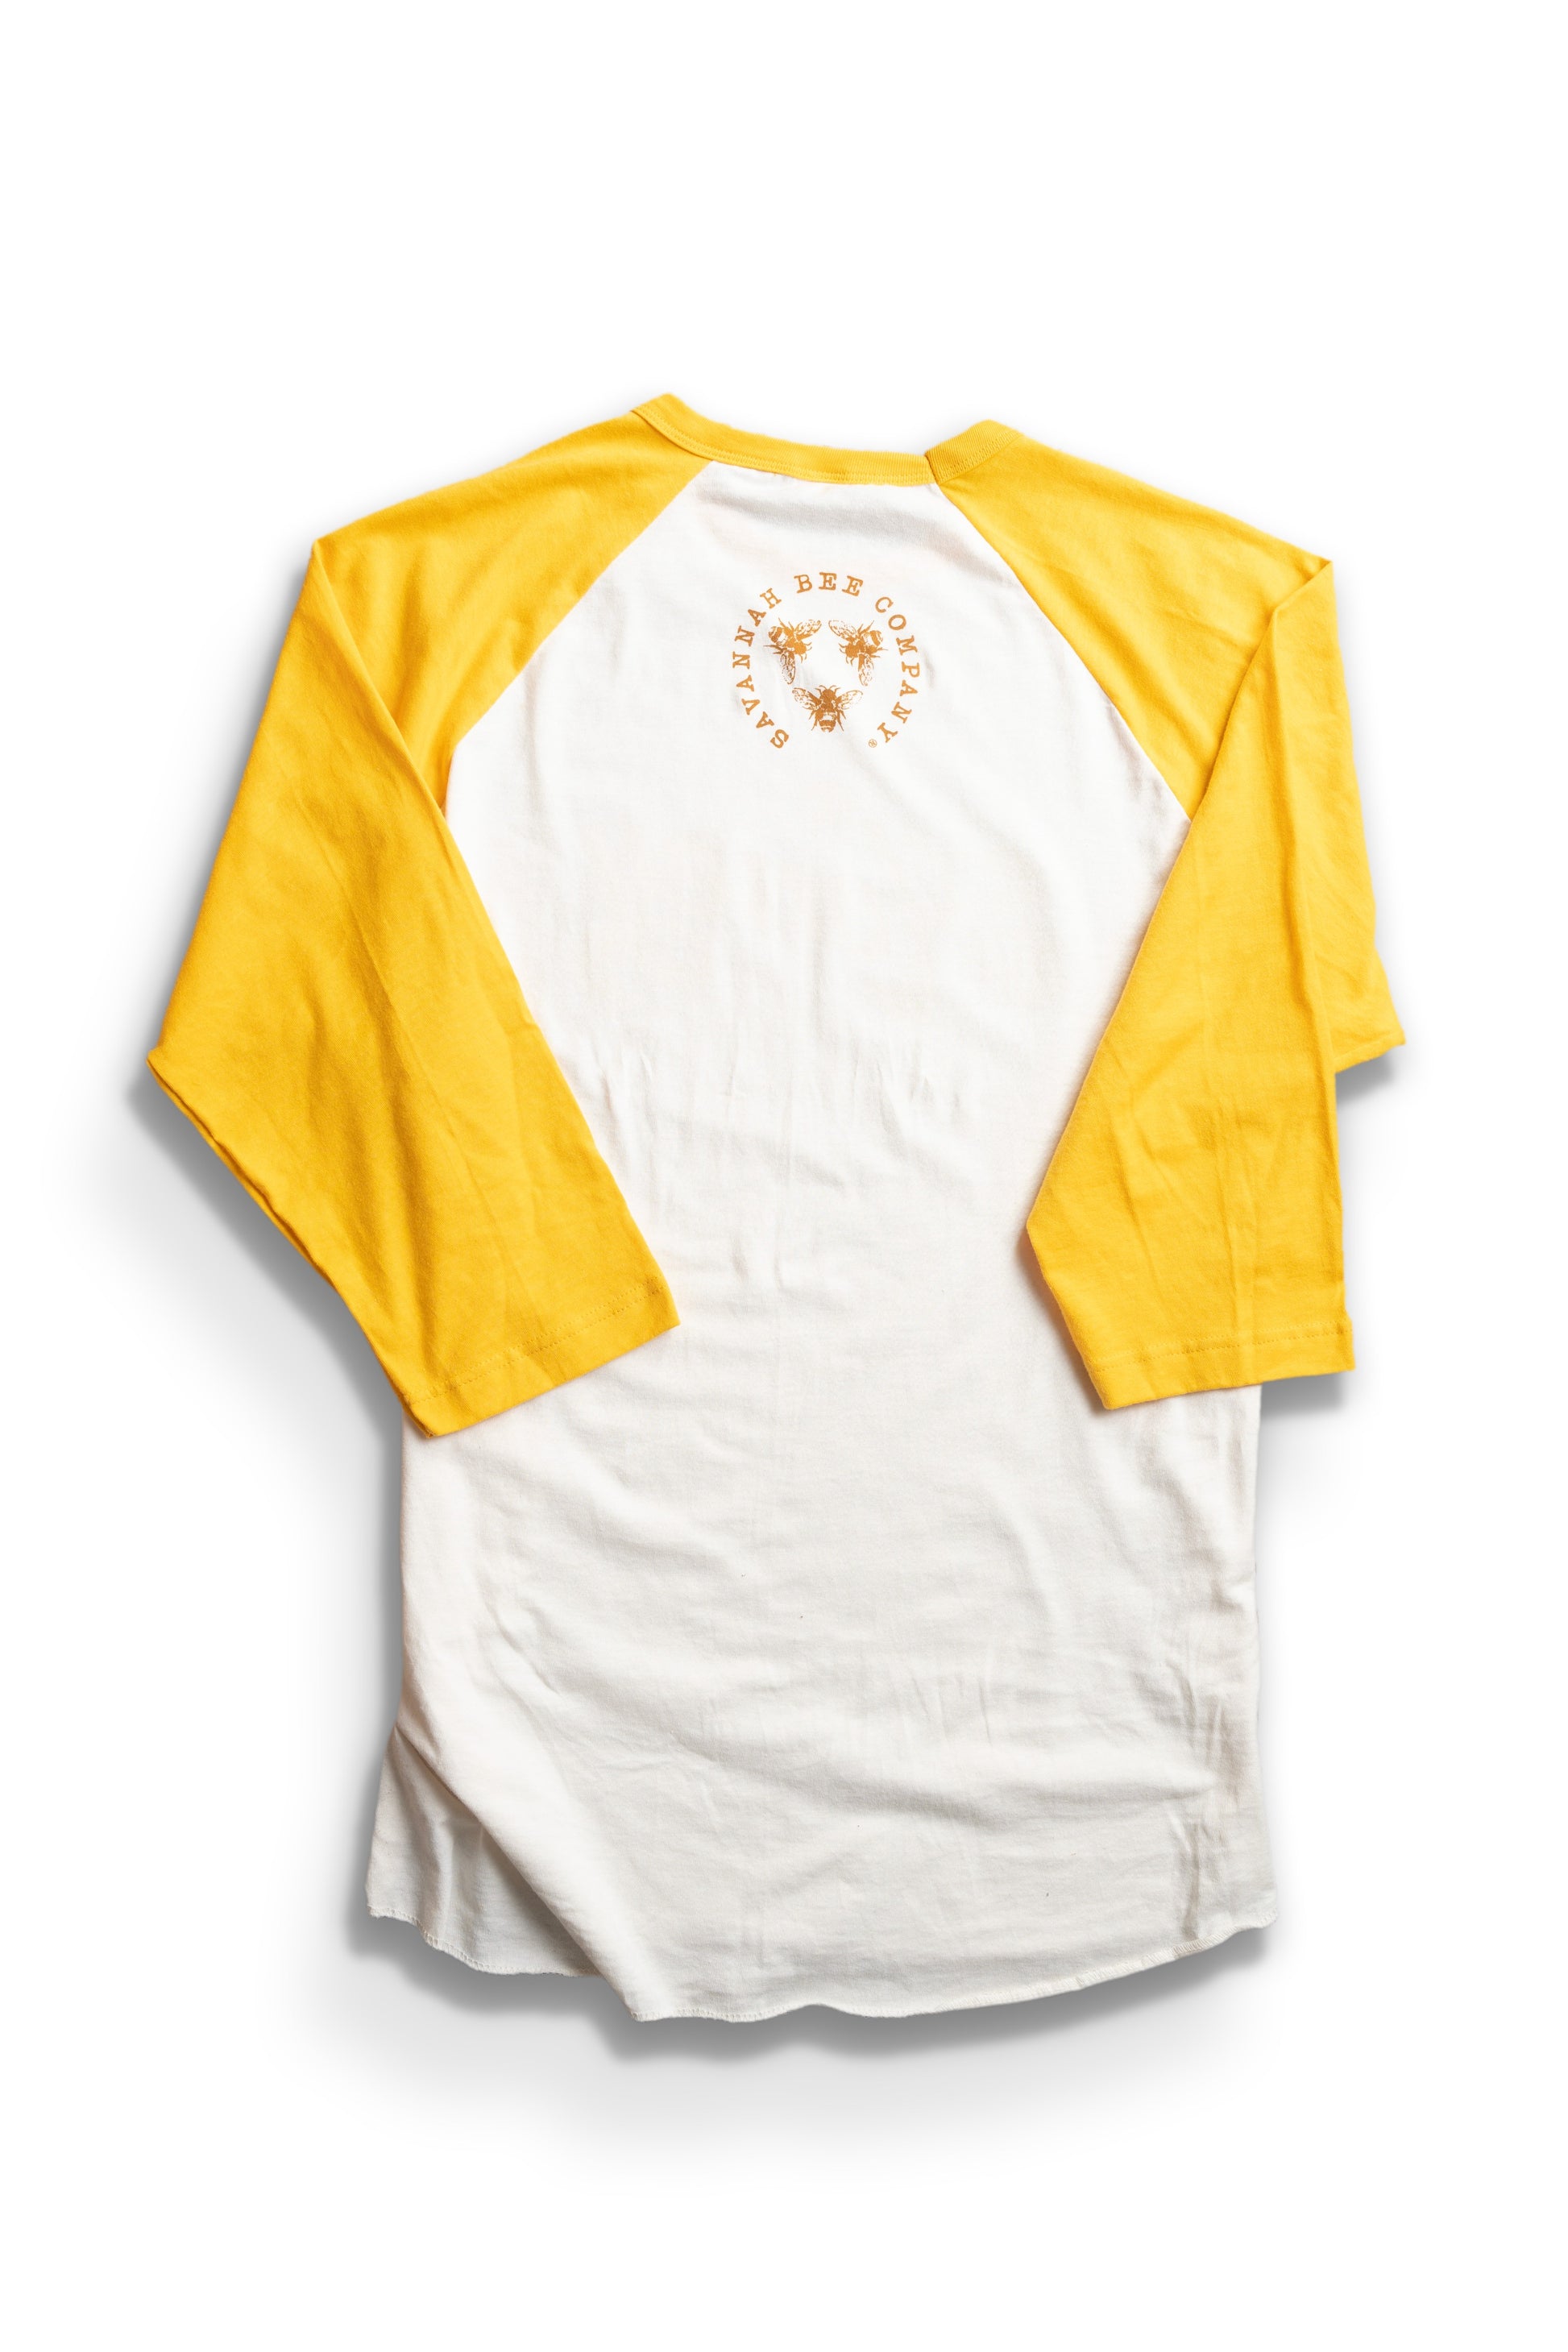 The back of Honey Raglan sleeve shirt  with Savannah Bee logo